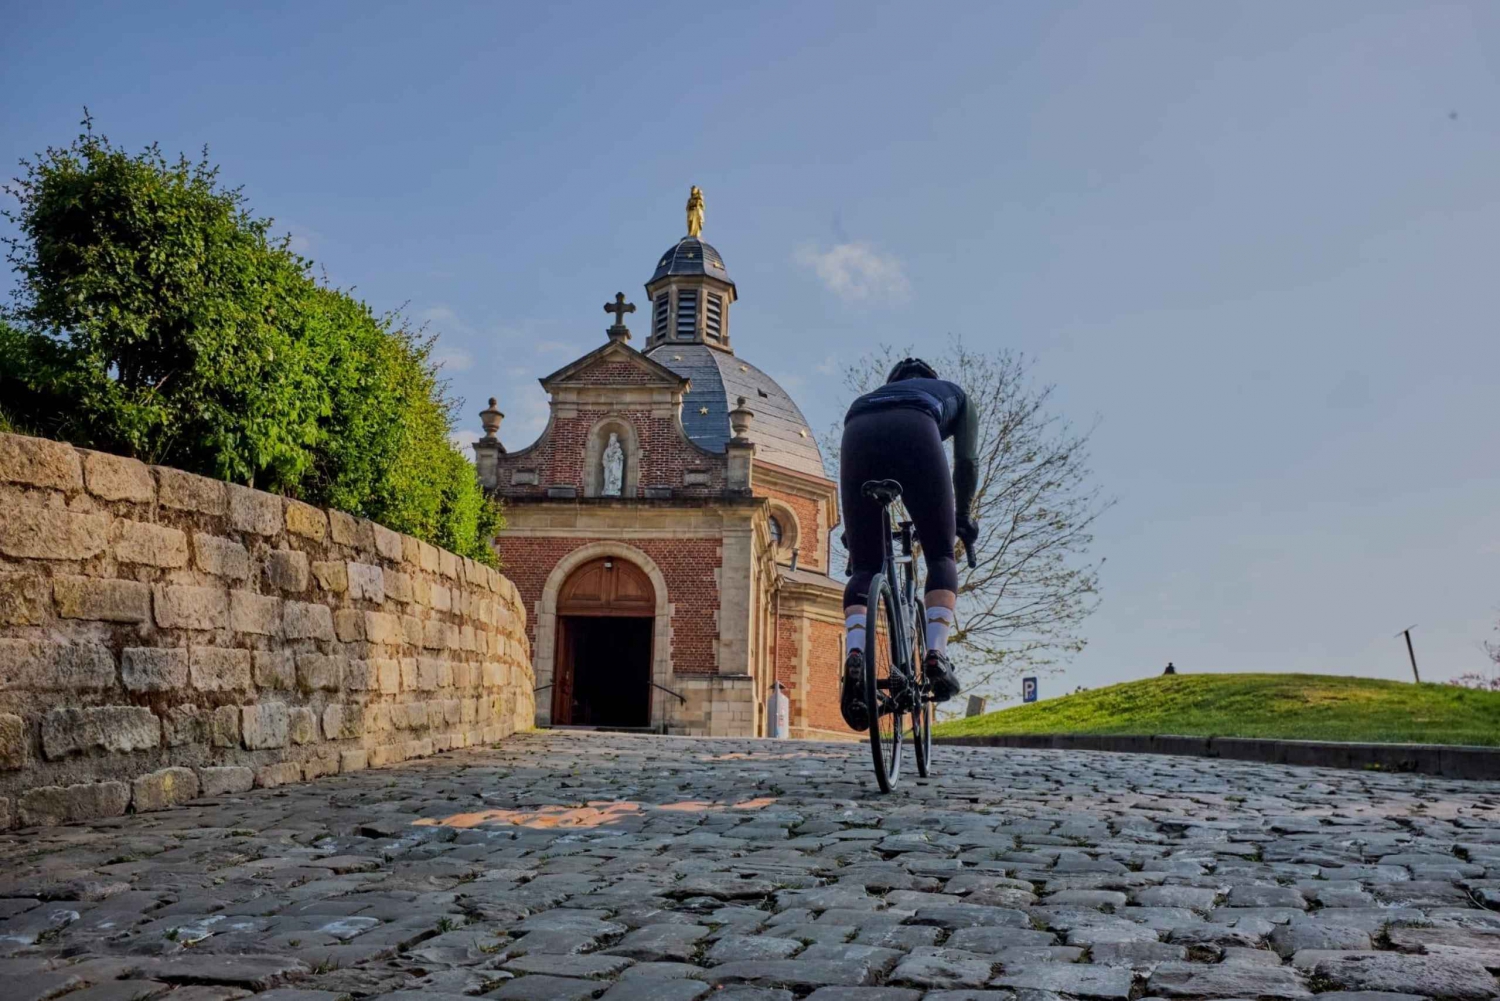 Fra Bruxelles til Flandern 100 km landevejscykeltur